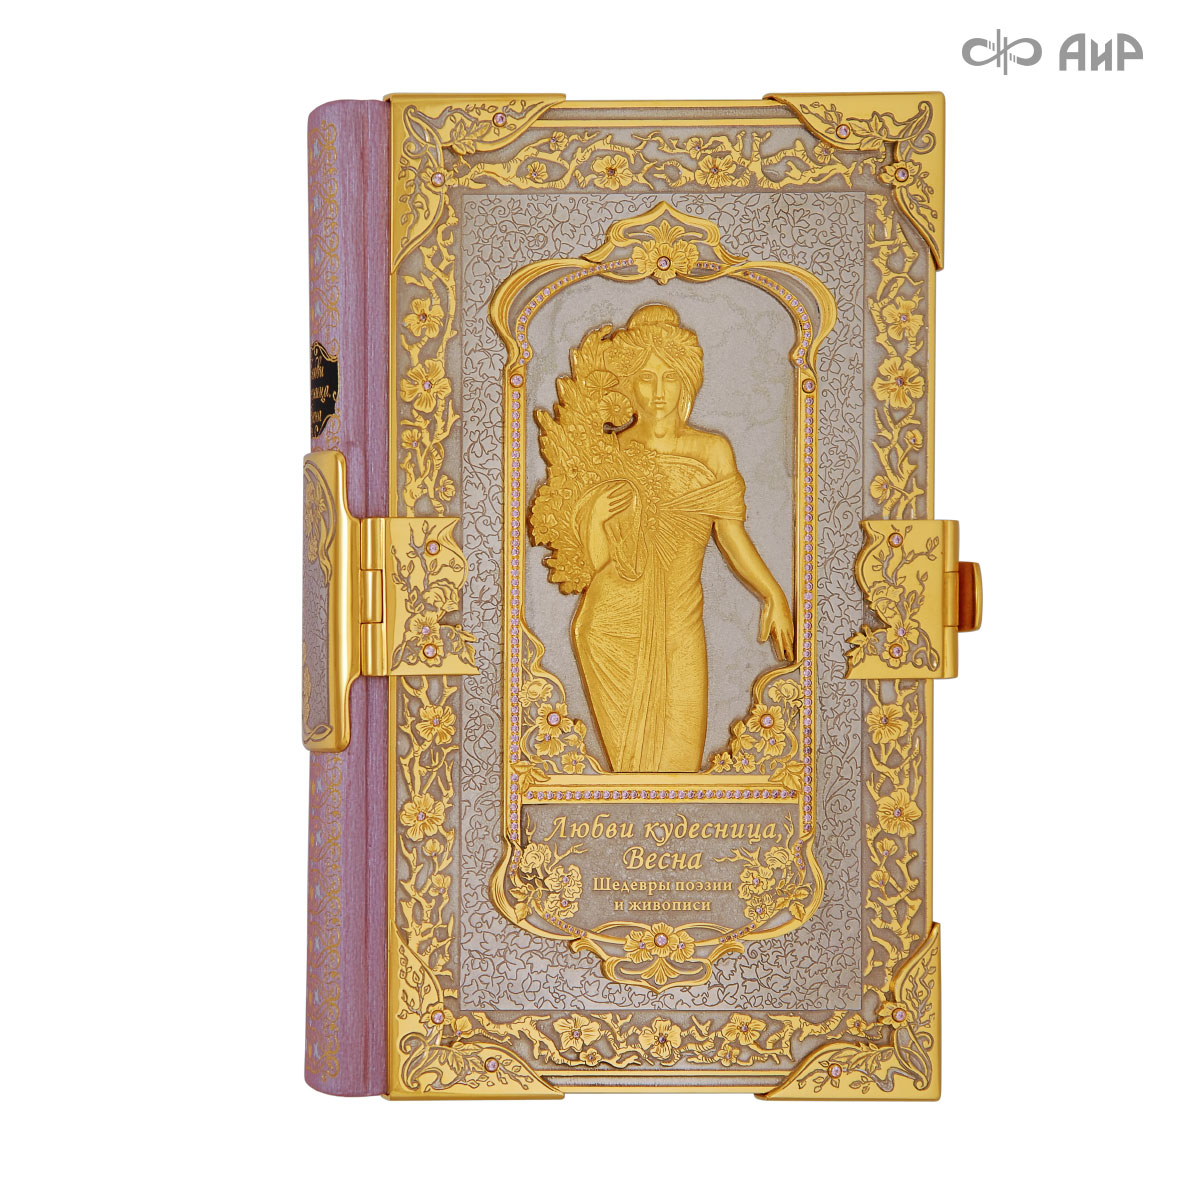  Книга в окладе Любви кудесница Весна с розовыми фианитами, Артикул: 18229 - Компания «АиР»